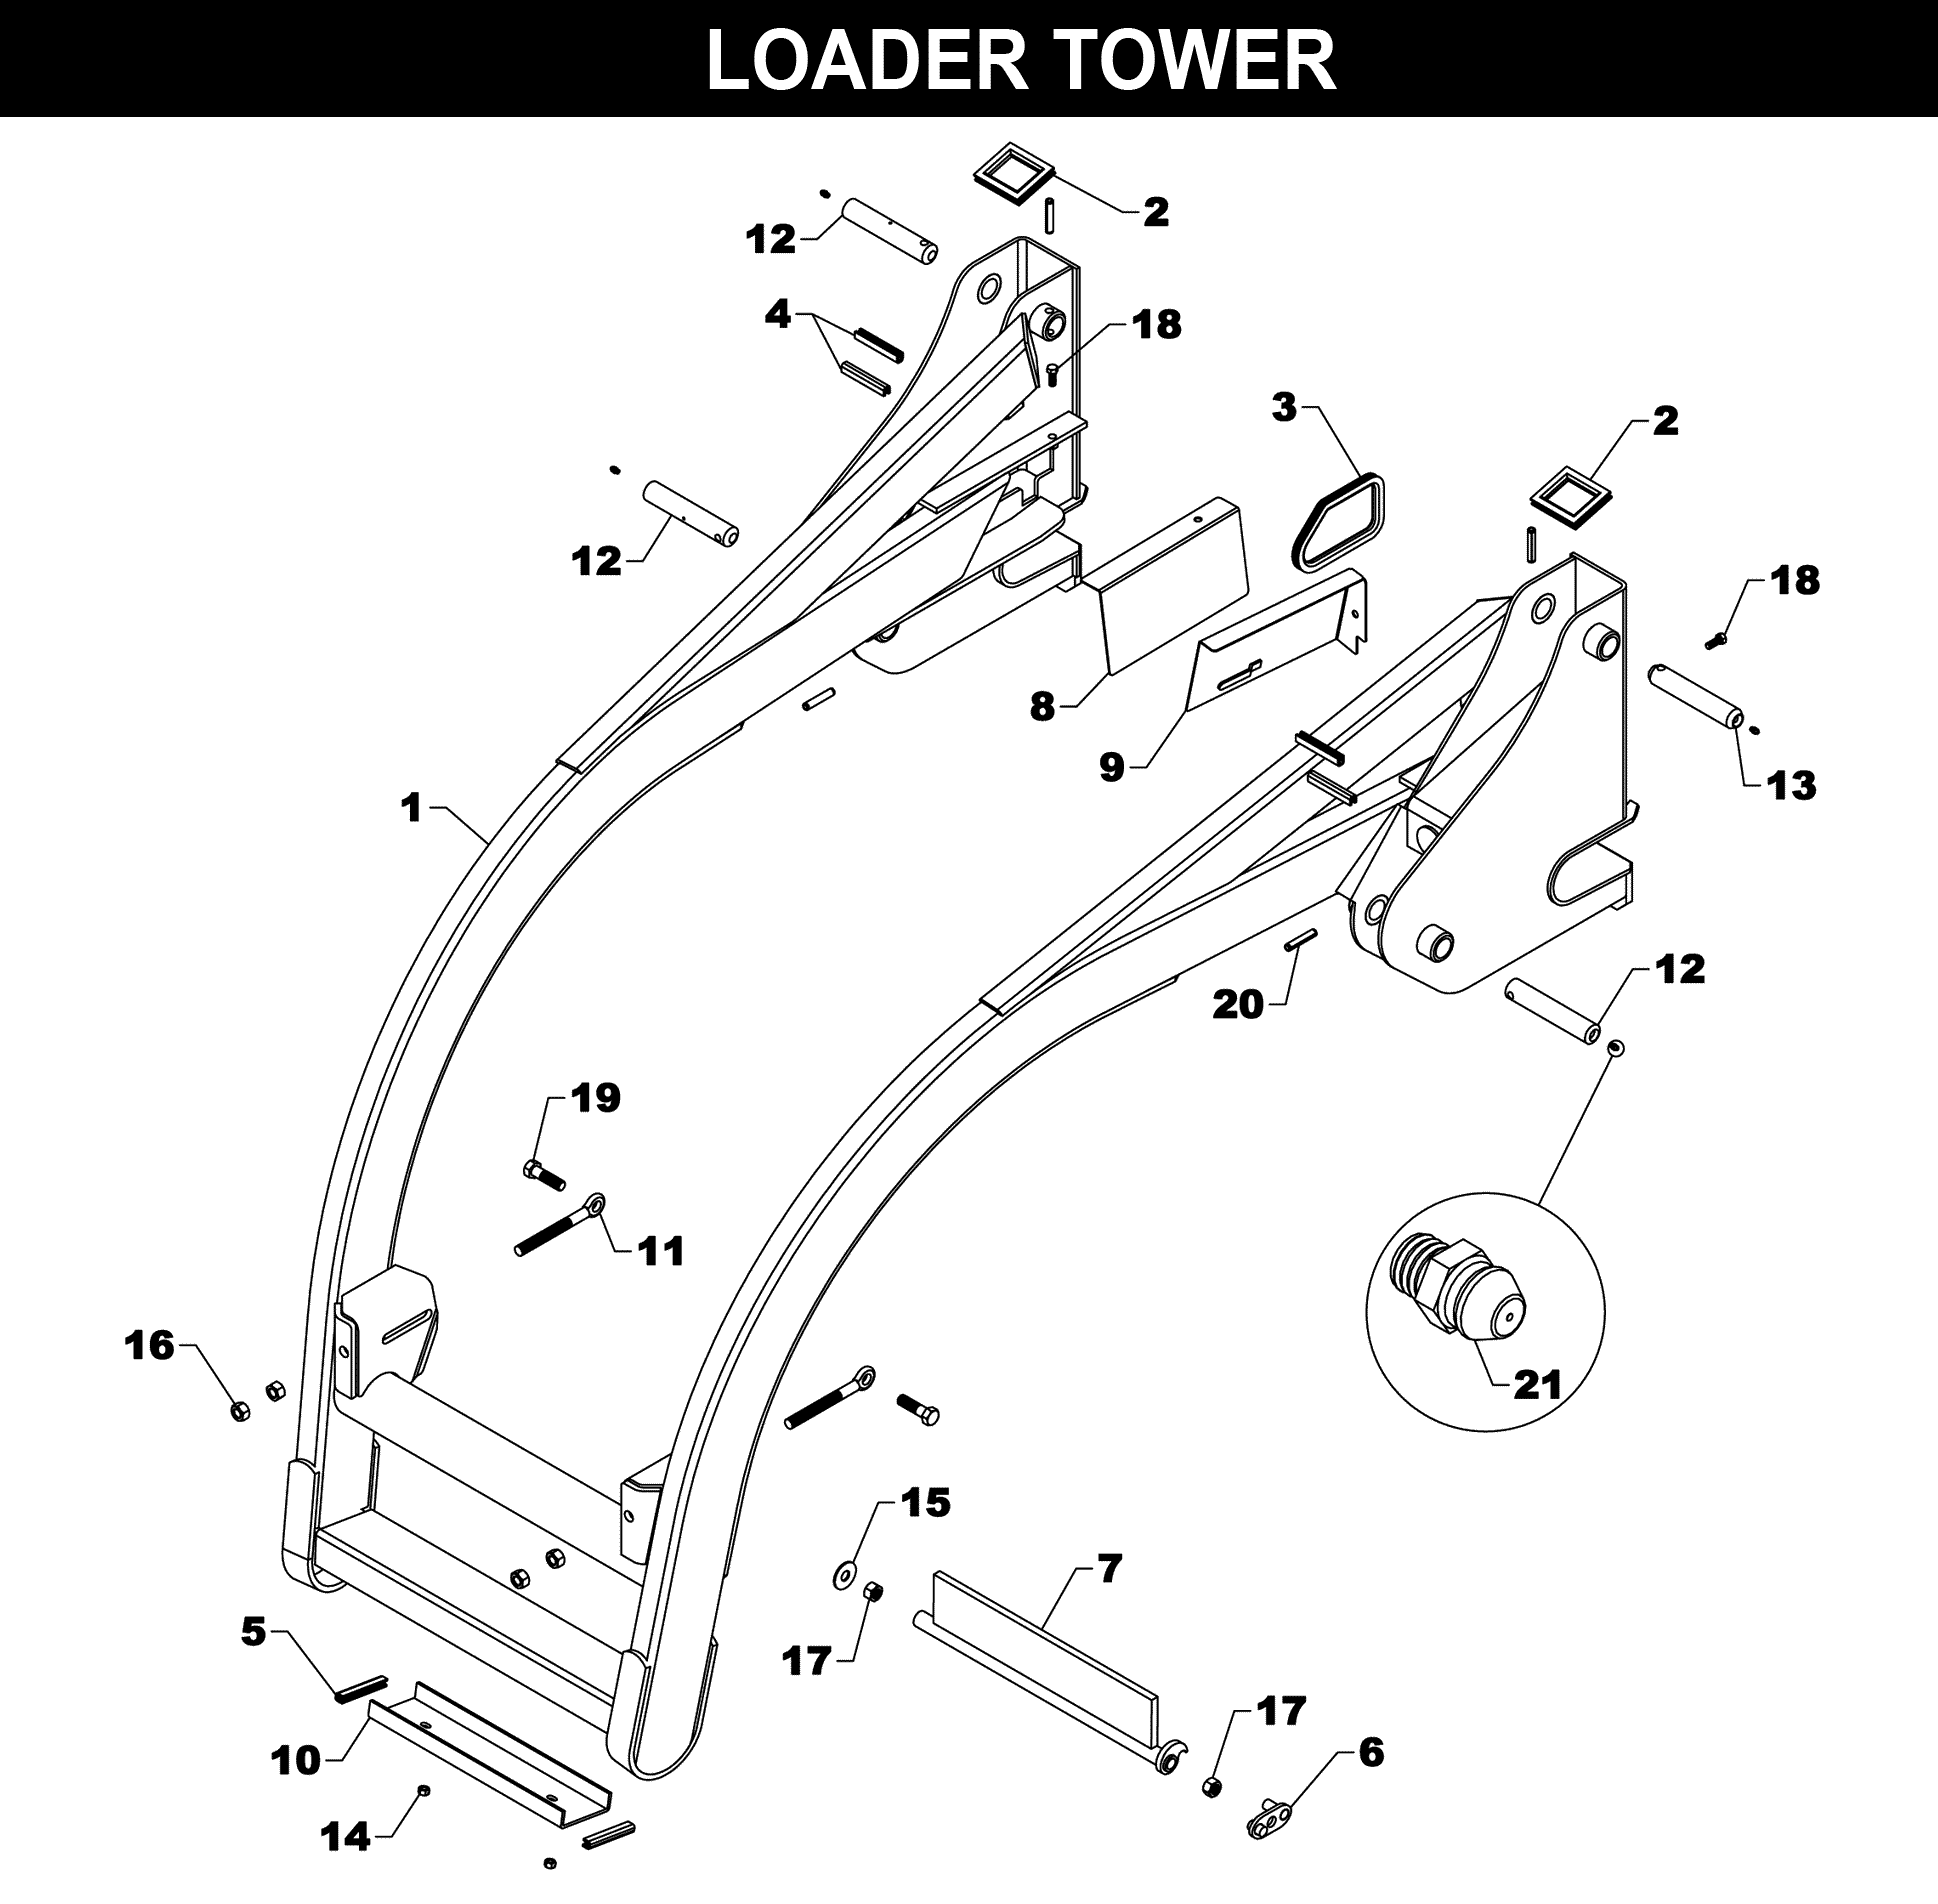  CC-360 Loader Tower